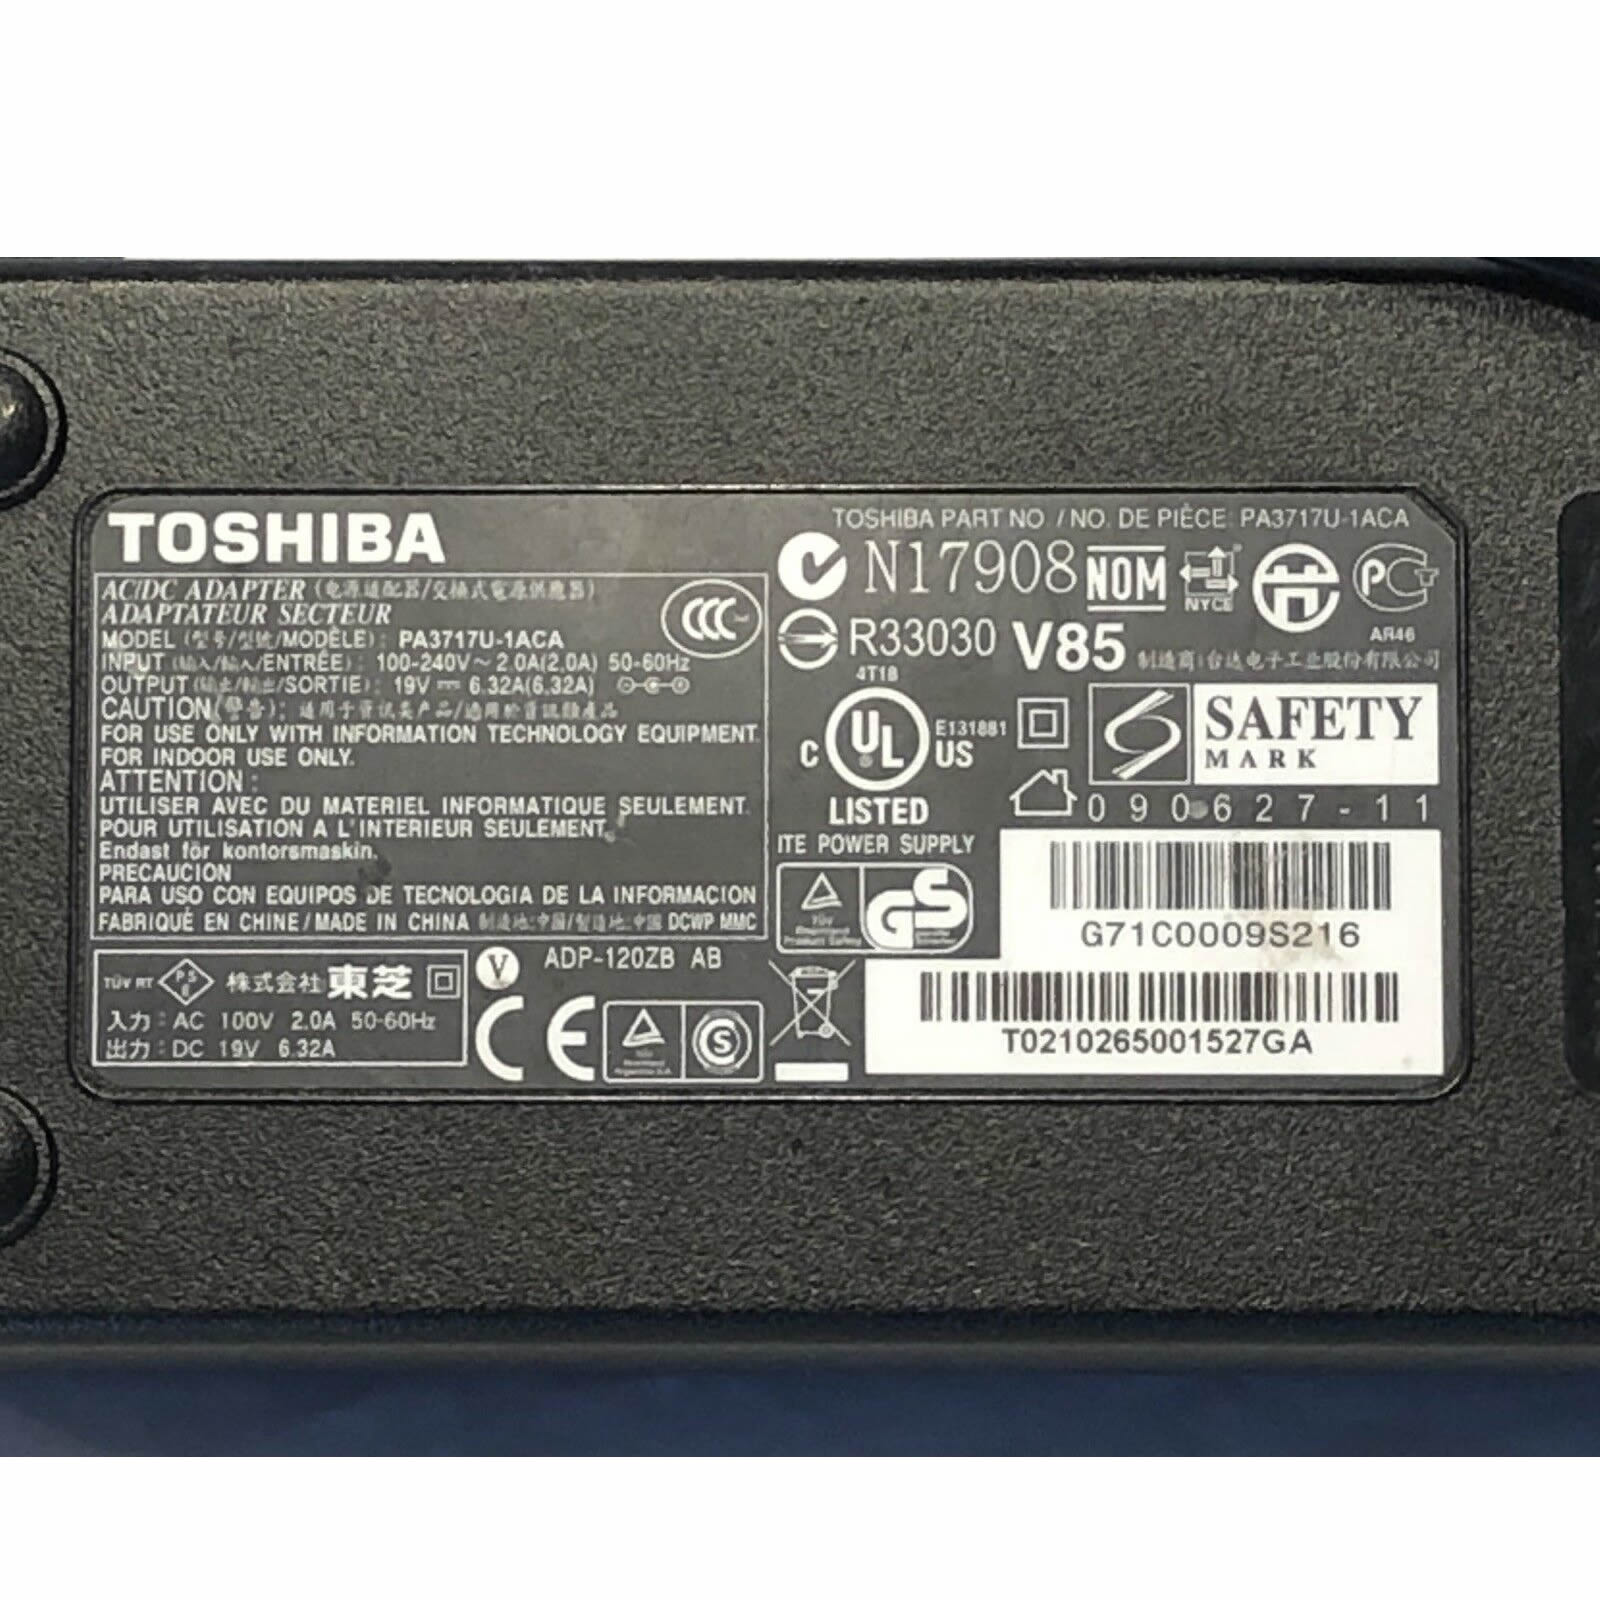 Toshiba 19V 6.32A 120W ADP-120ZB AB,PA-1121-04 Original Ac Adapter for  Toshiba Satellite A Satellite L Series